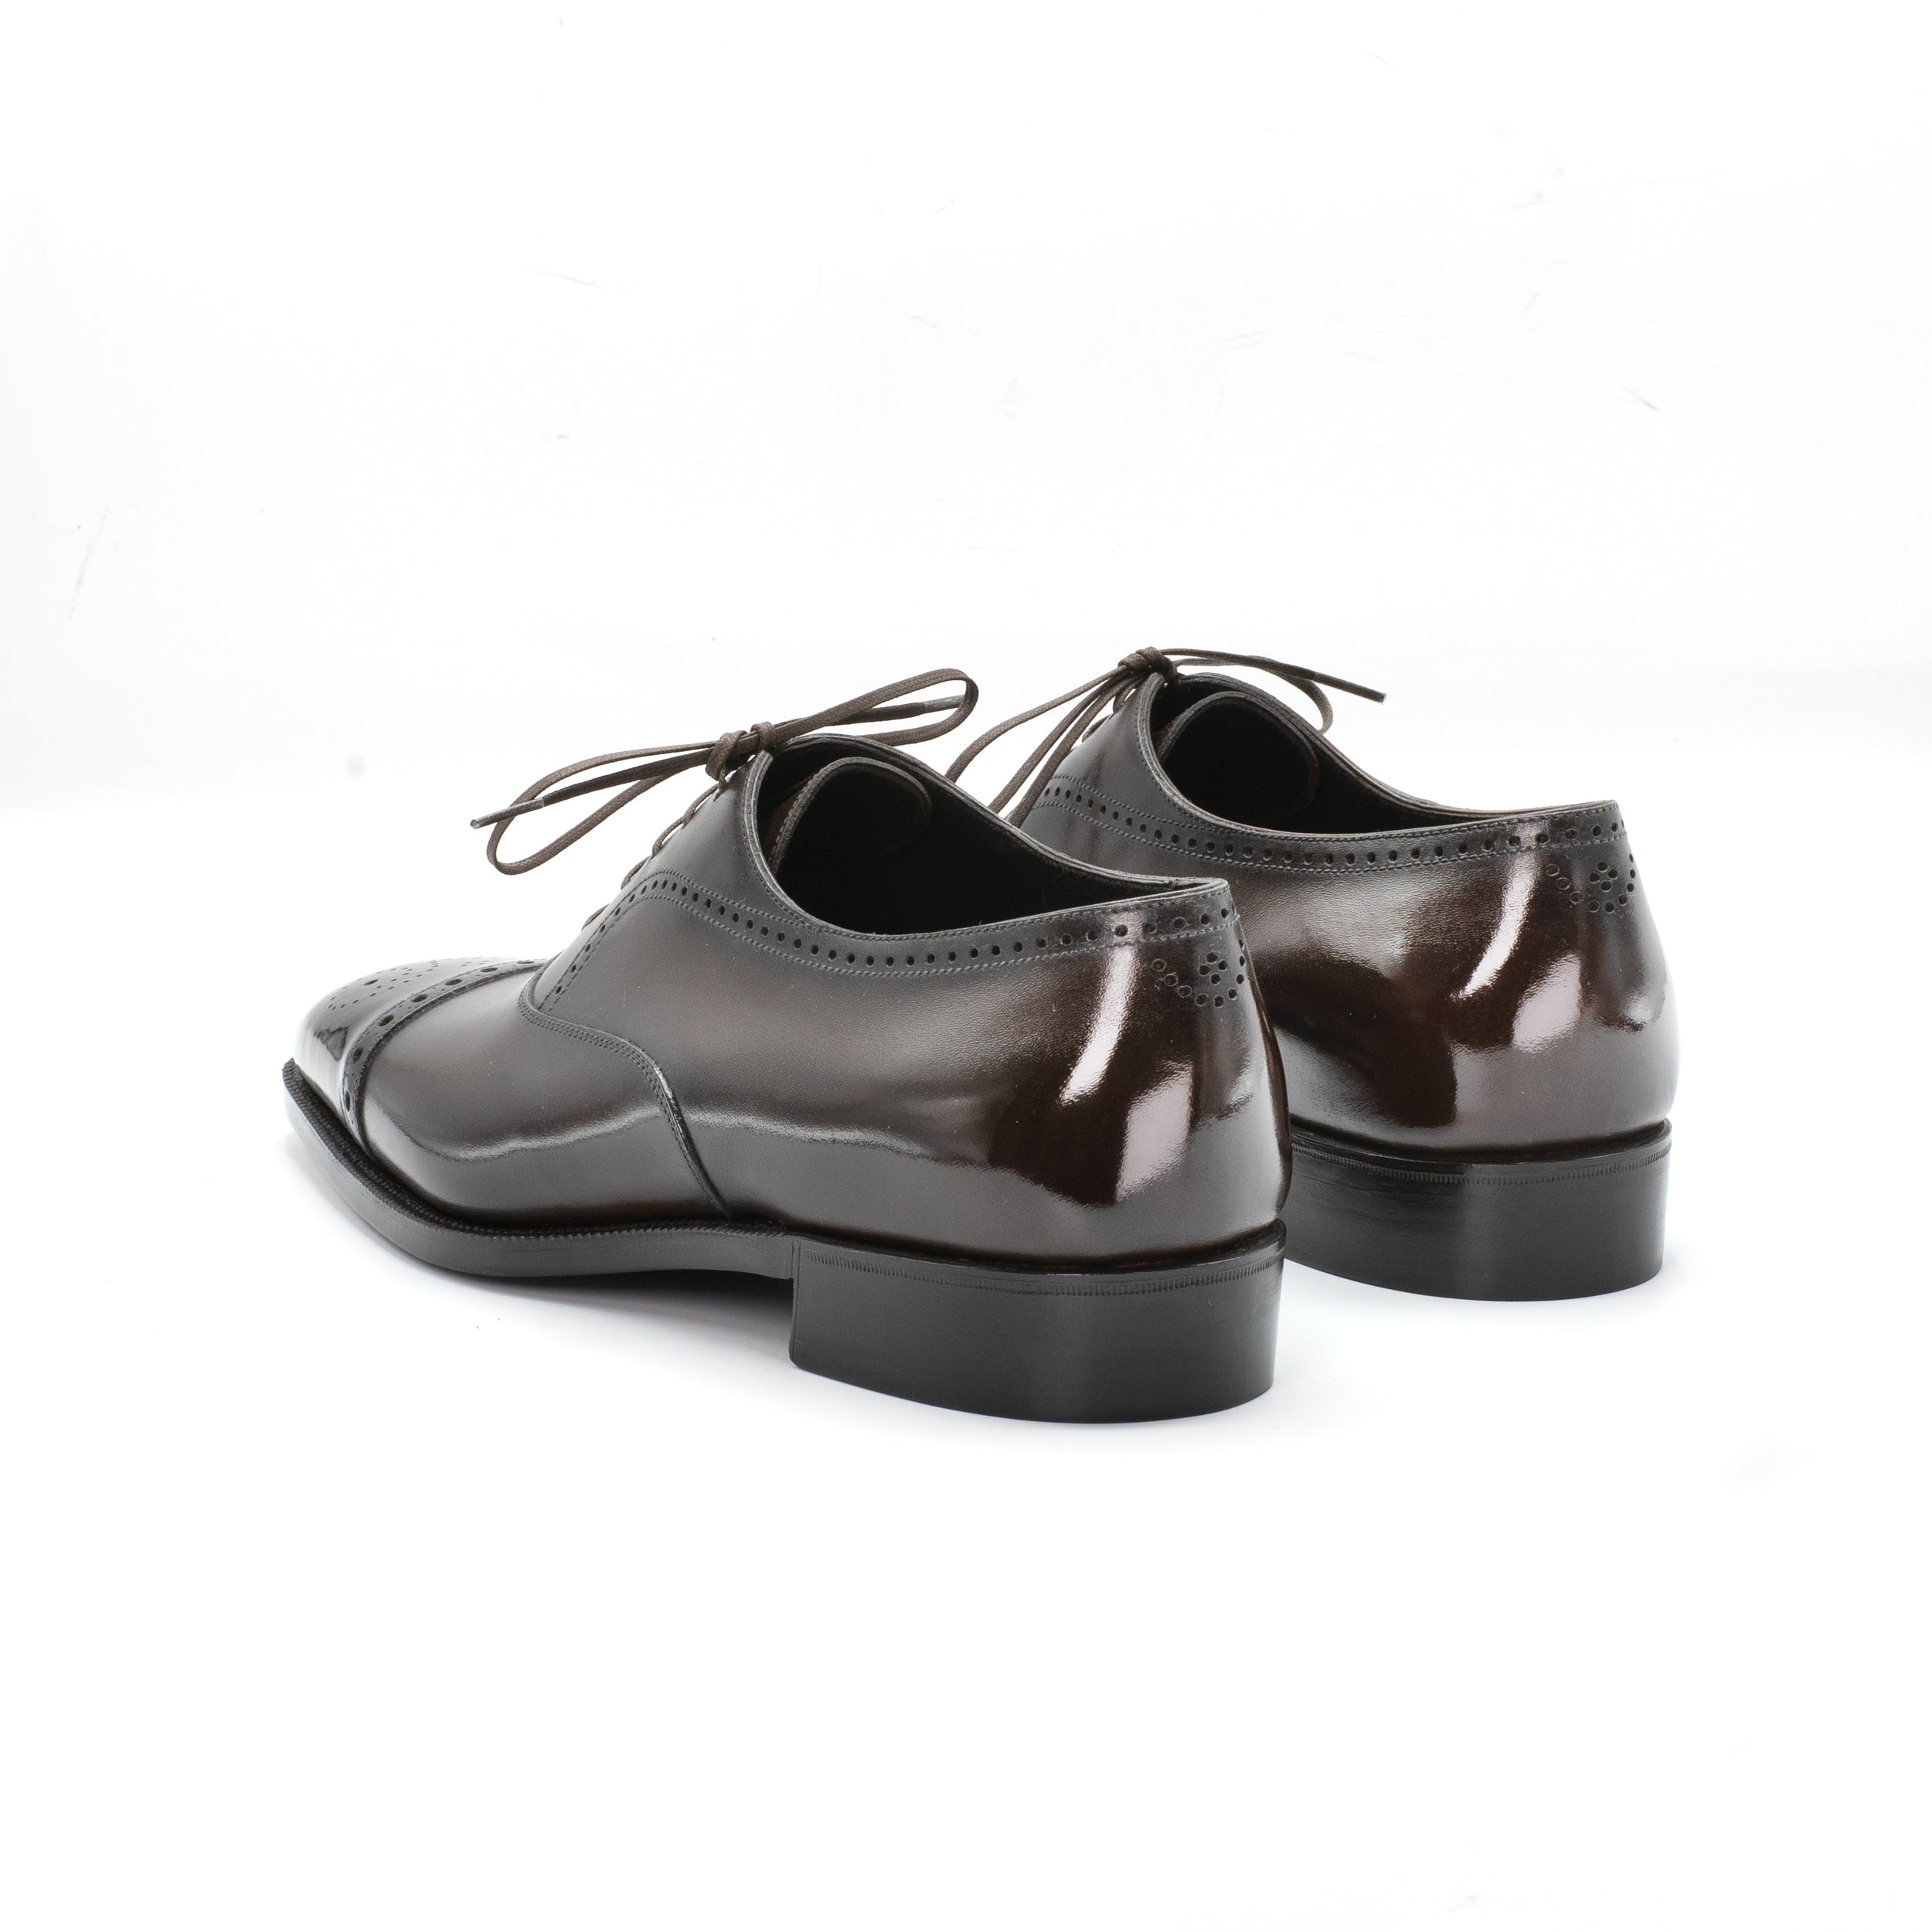 Medallion Cap Toe Oxford Shoe by Norman Vilalta Bespoke Shoemakers